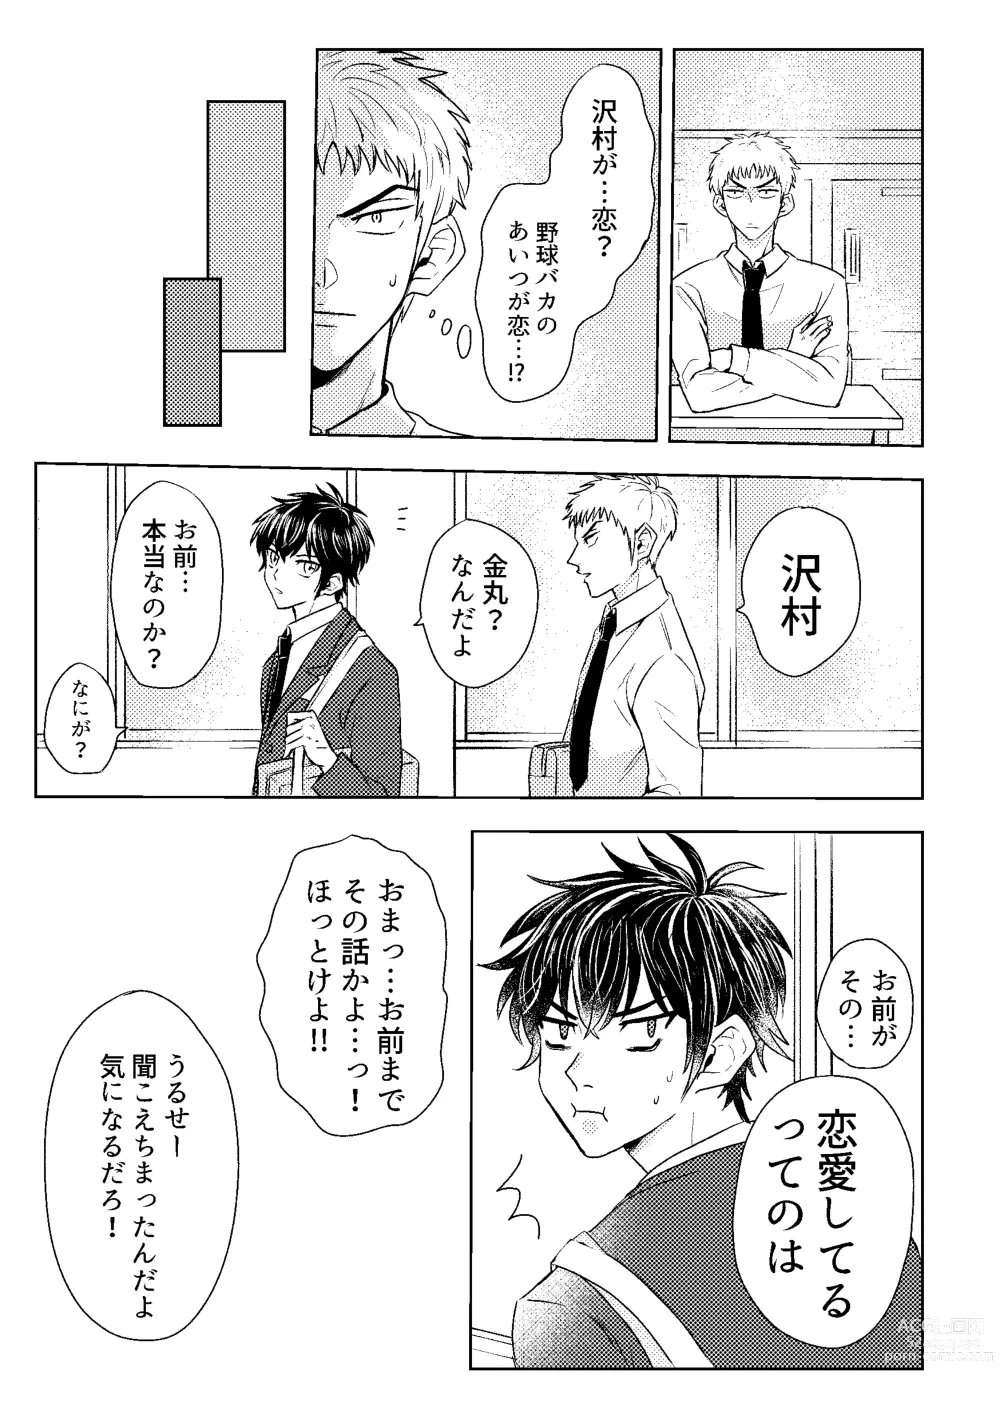 Page 5 of doujinshi Hatsukoi Sparkle